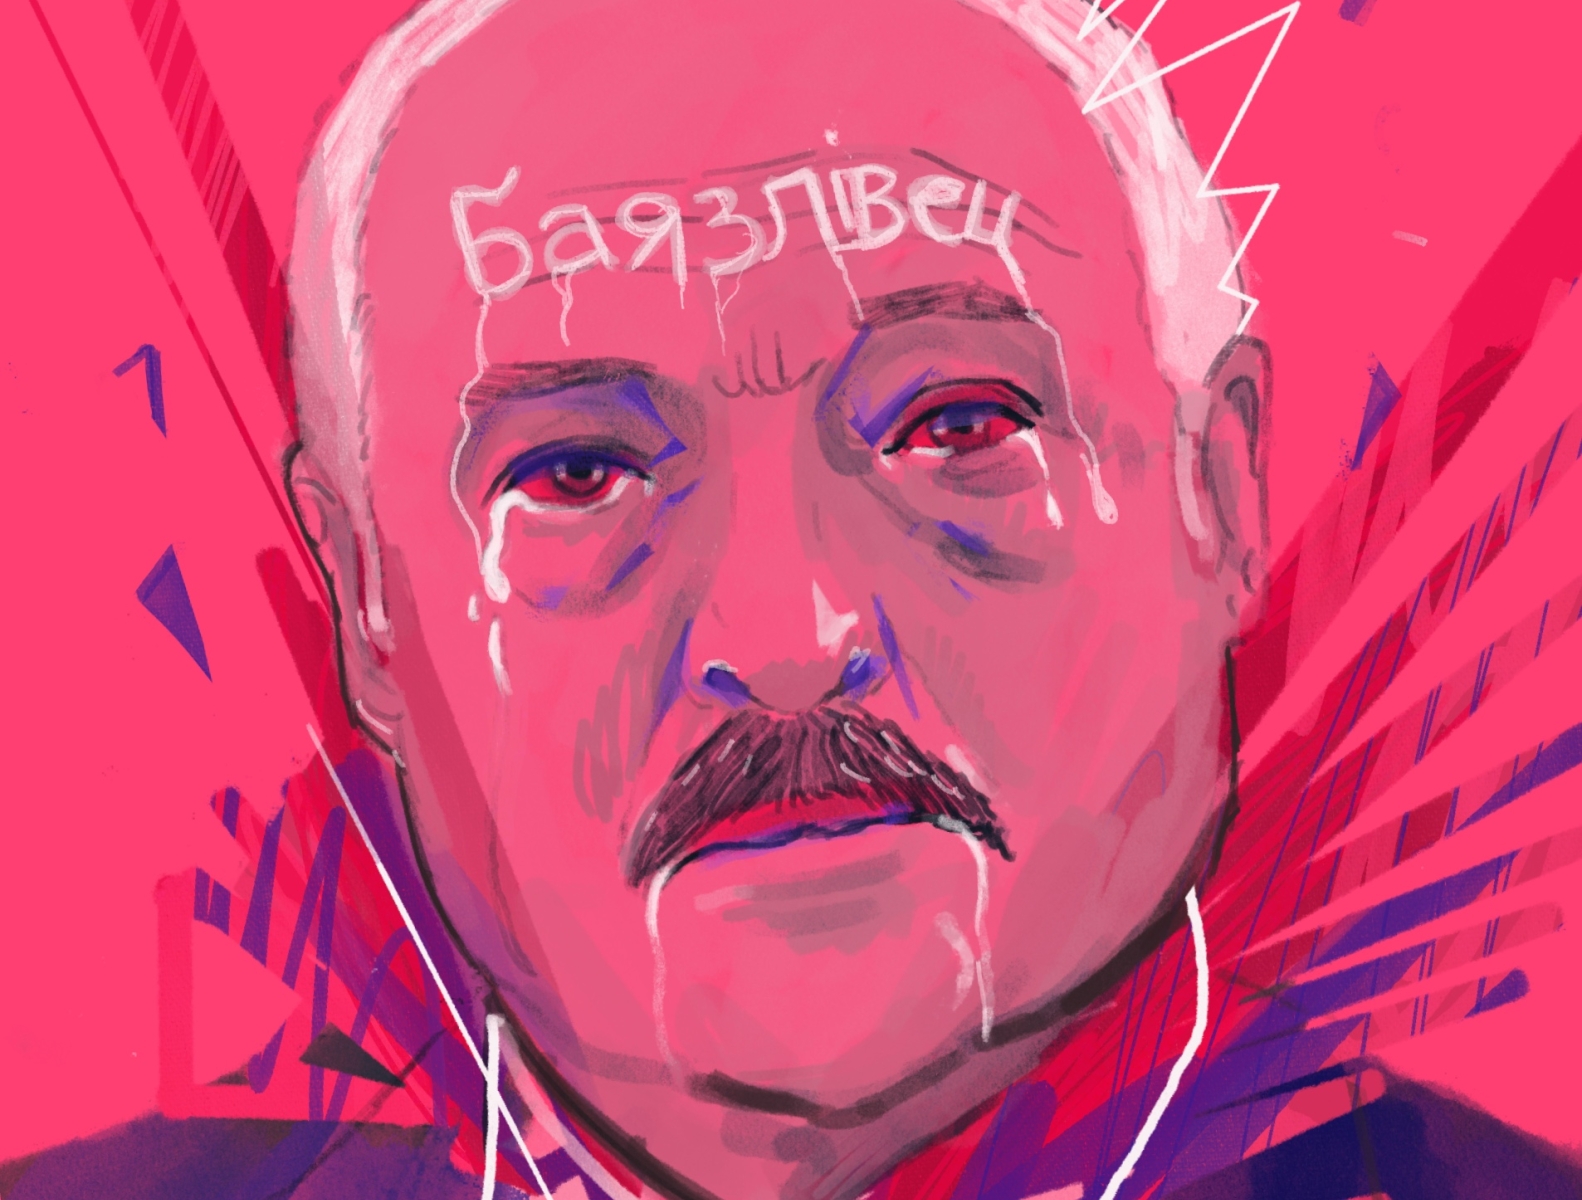 The Last Idiot country coward fight free belarus freedom illustration illustrator people portrait portrait art portrait illustration portrait painting portraits